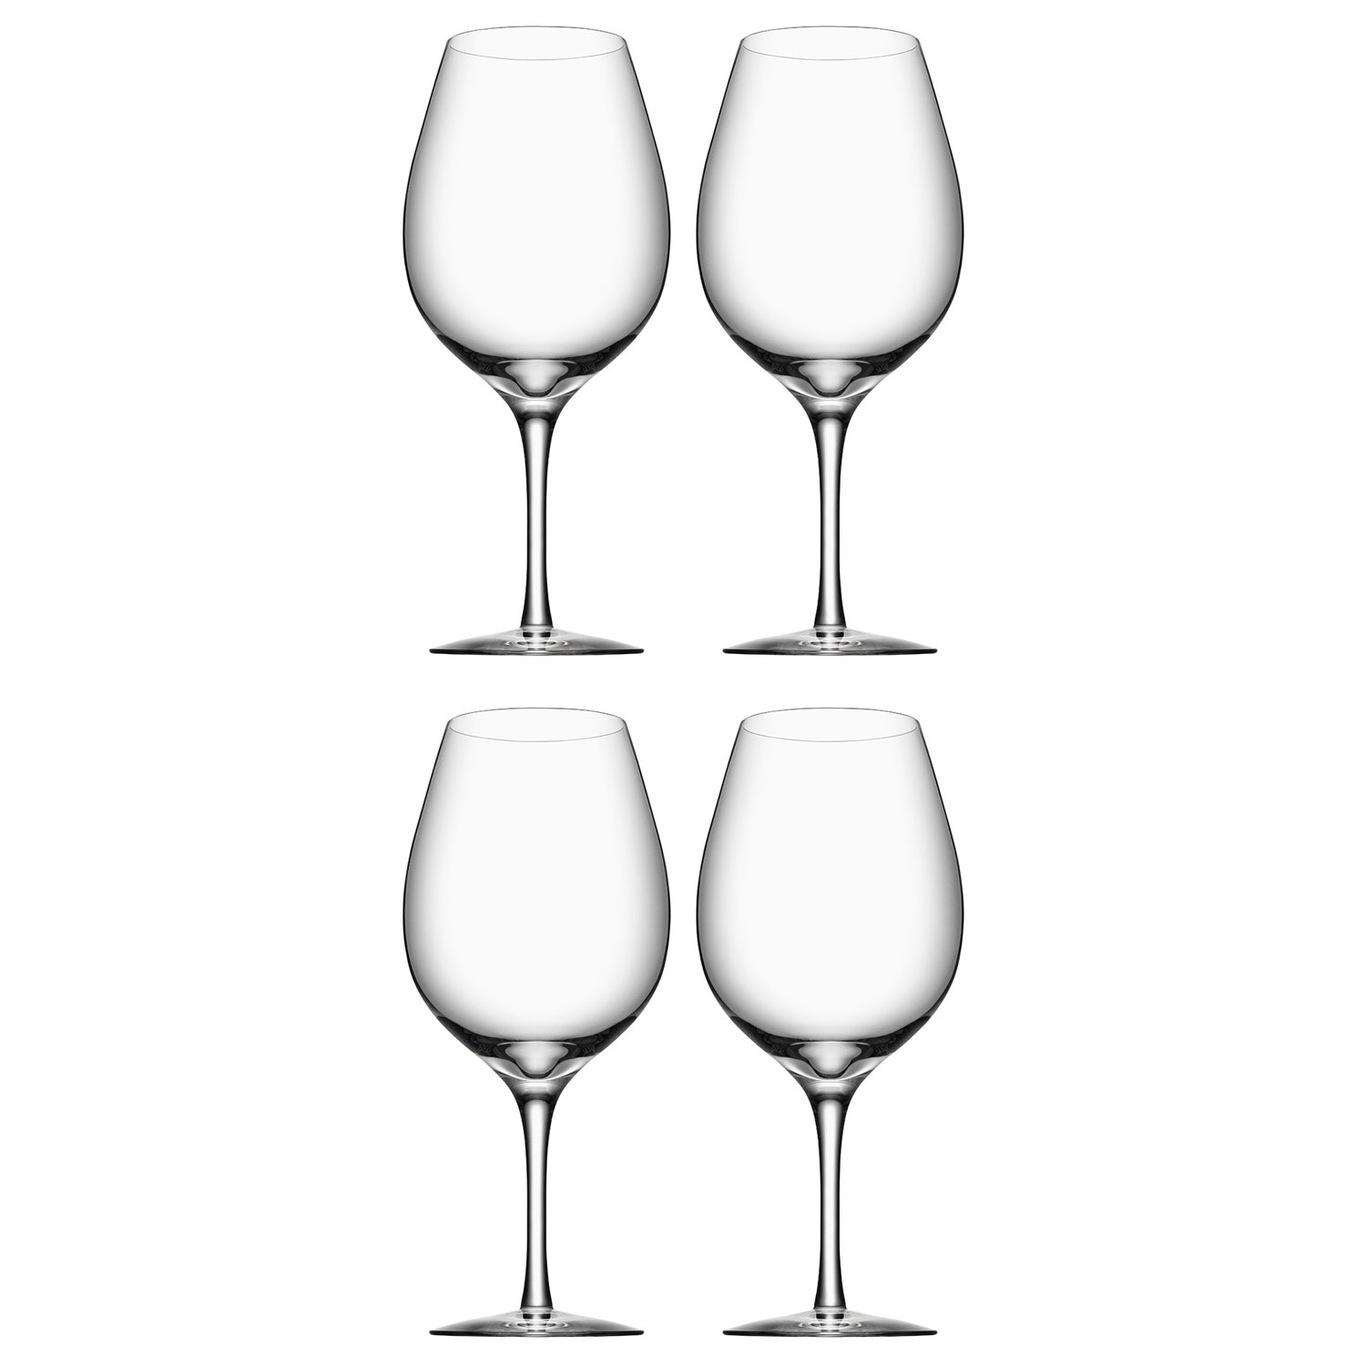 https://royaldesign.com/image/2/orrefors-more-wine-glass-xl-61-cl-4-pcs-0?w=800&quality=80